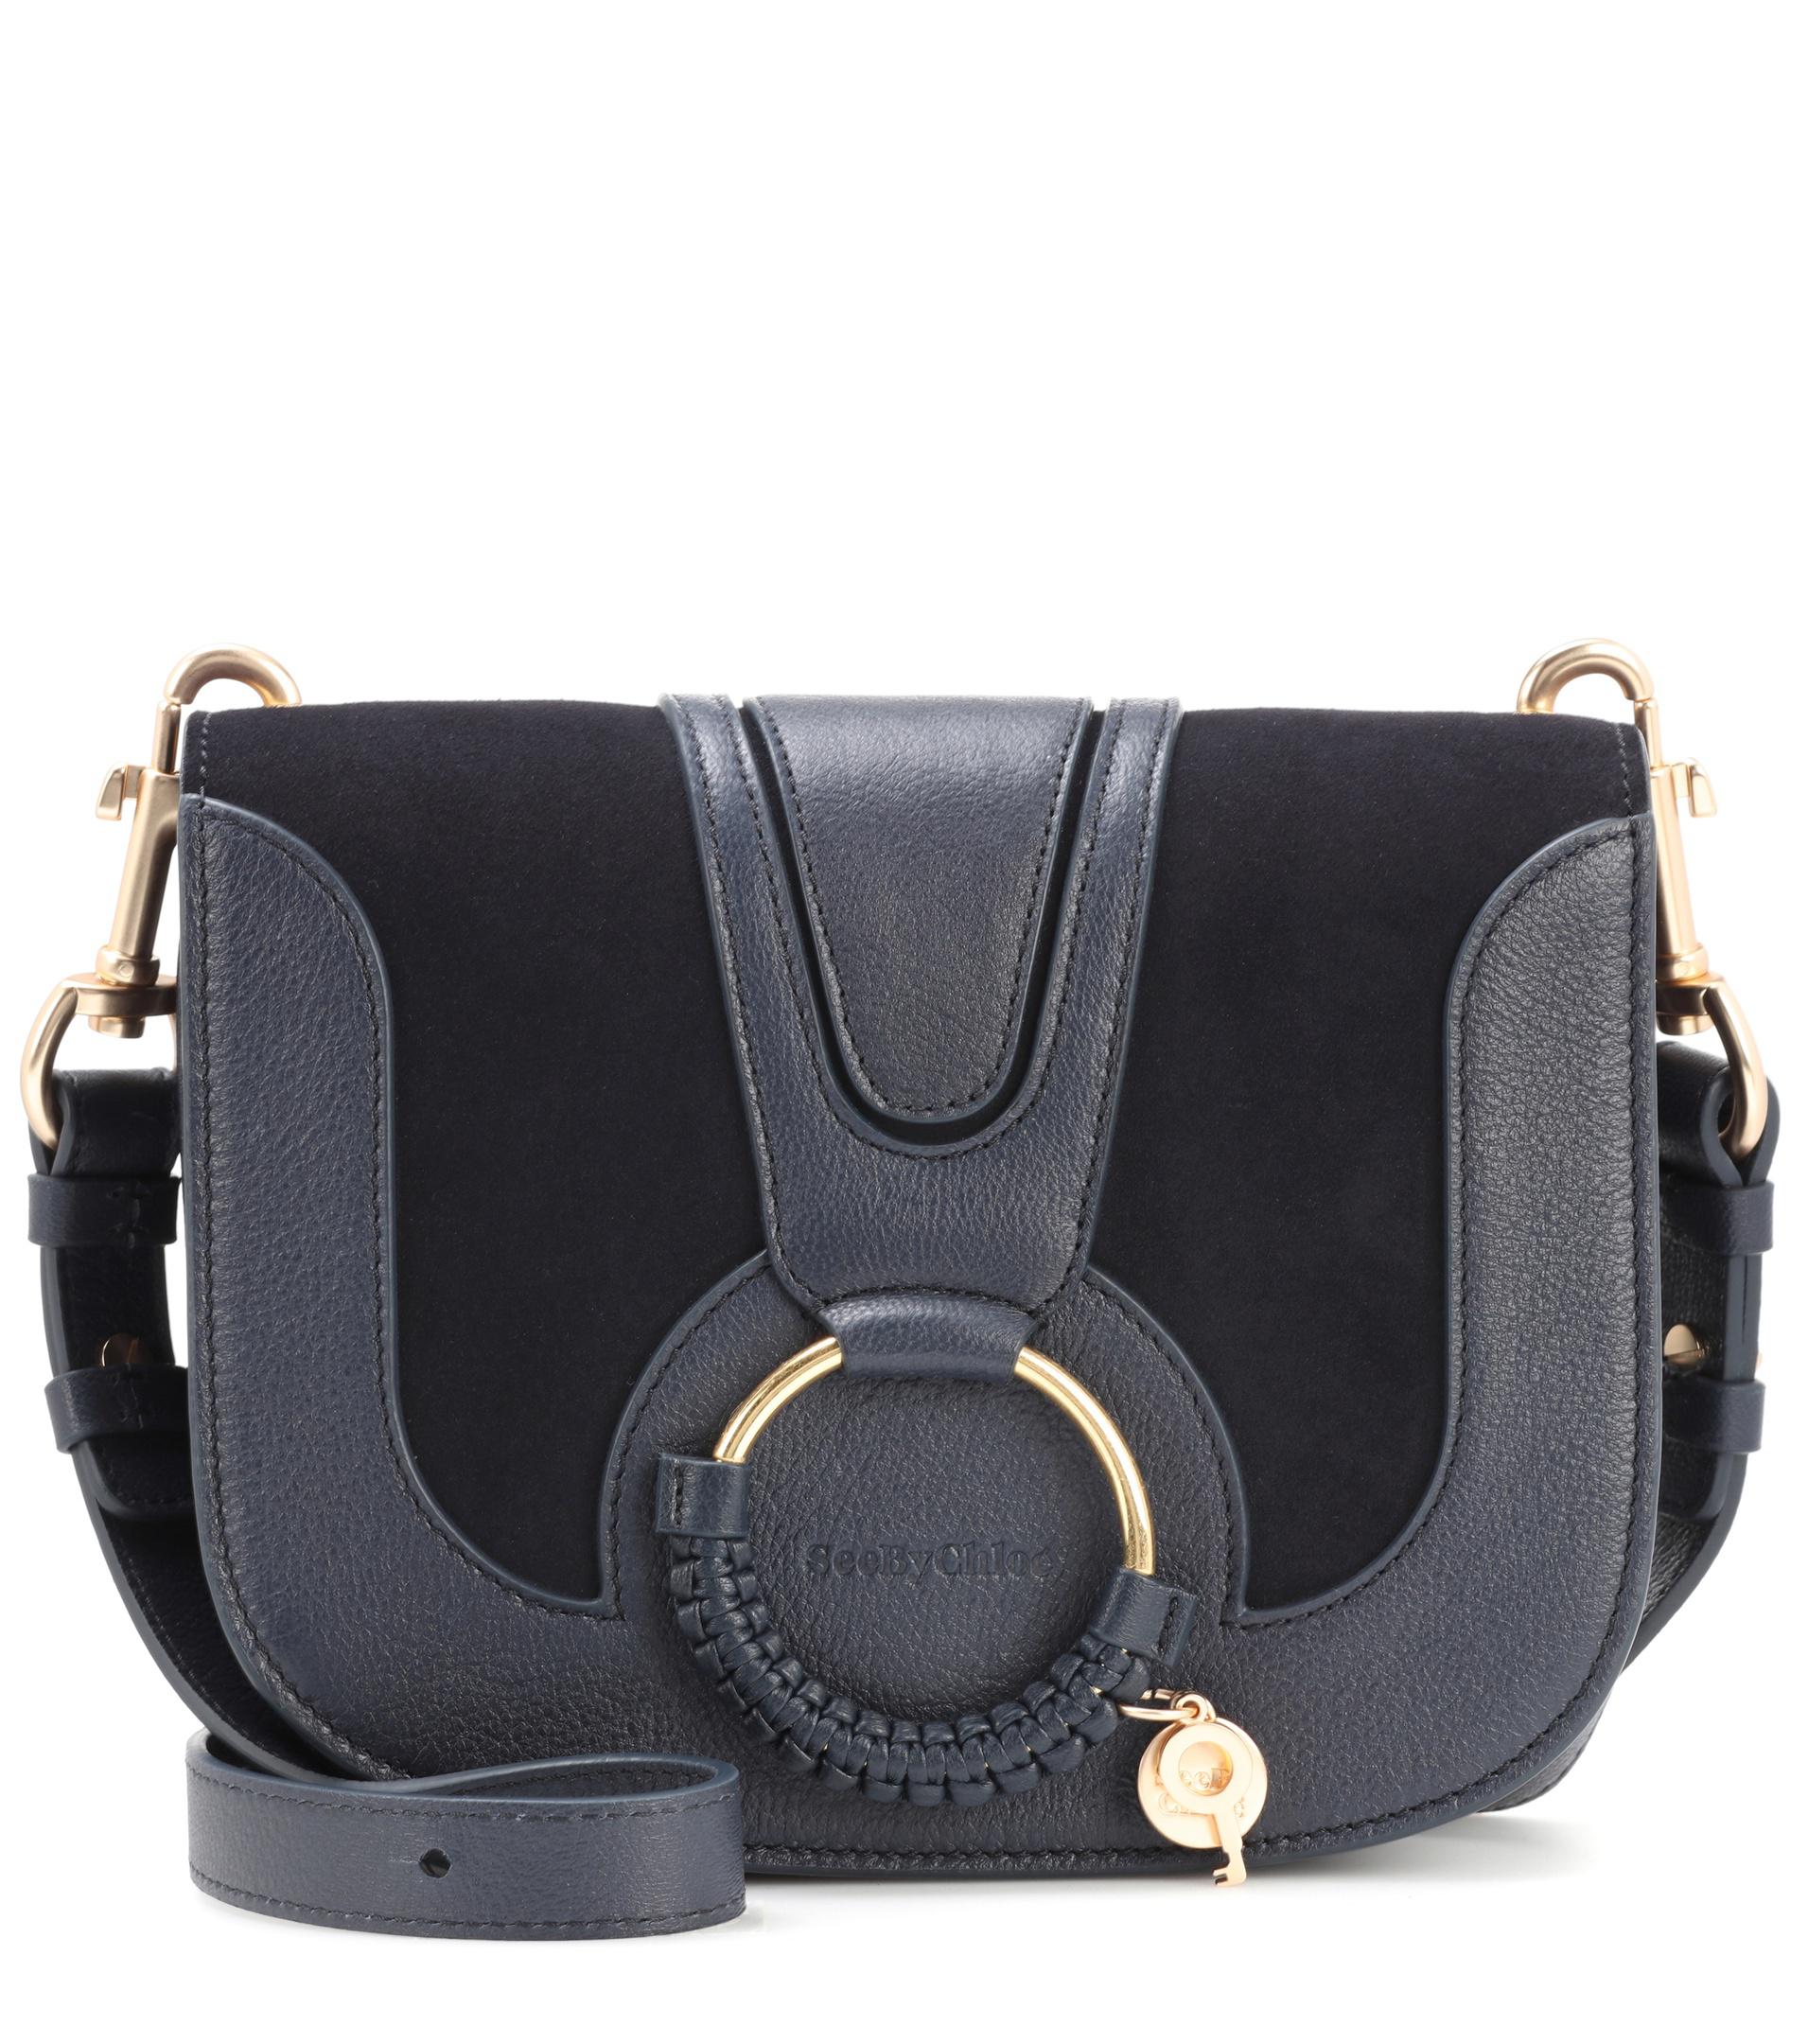 See By Chloé Suede Hana Medium Leather Shoulder Bag in Black - Lyst